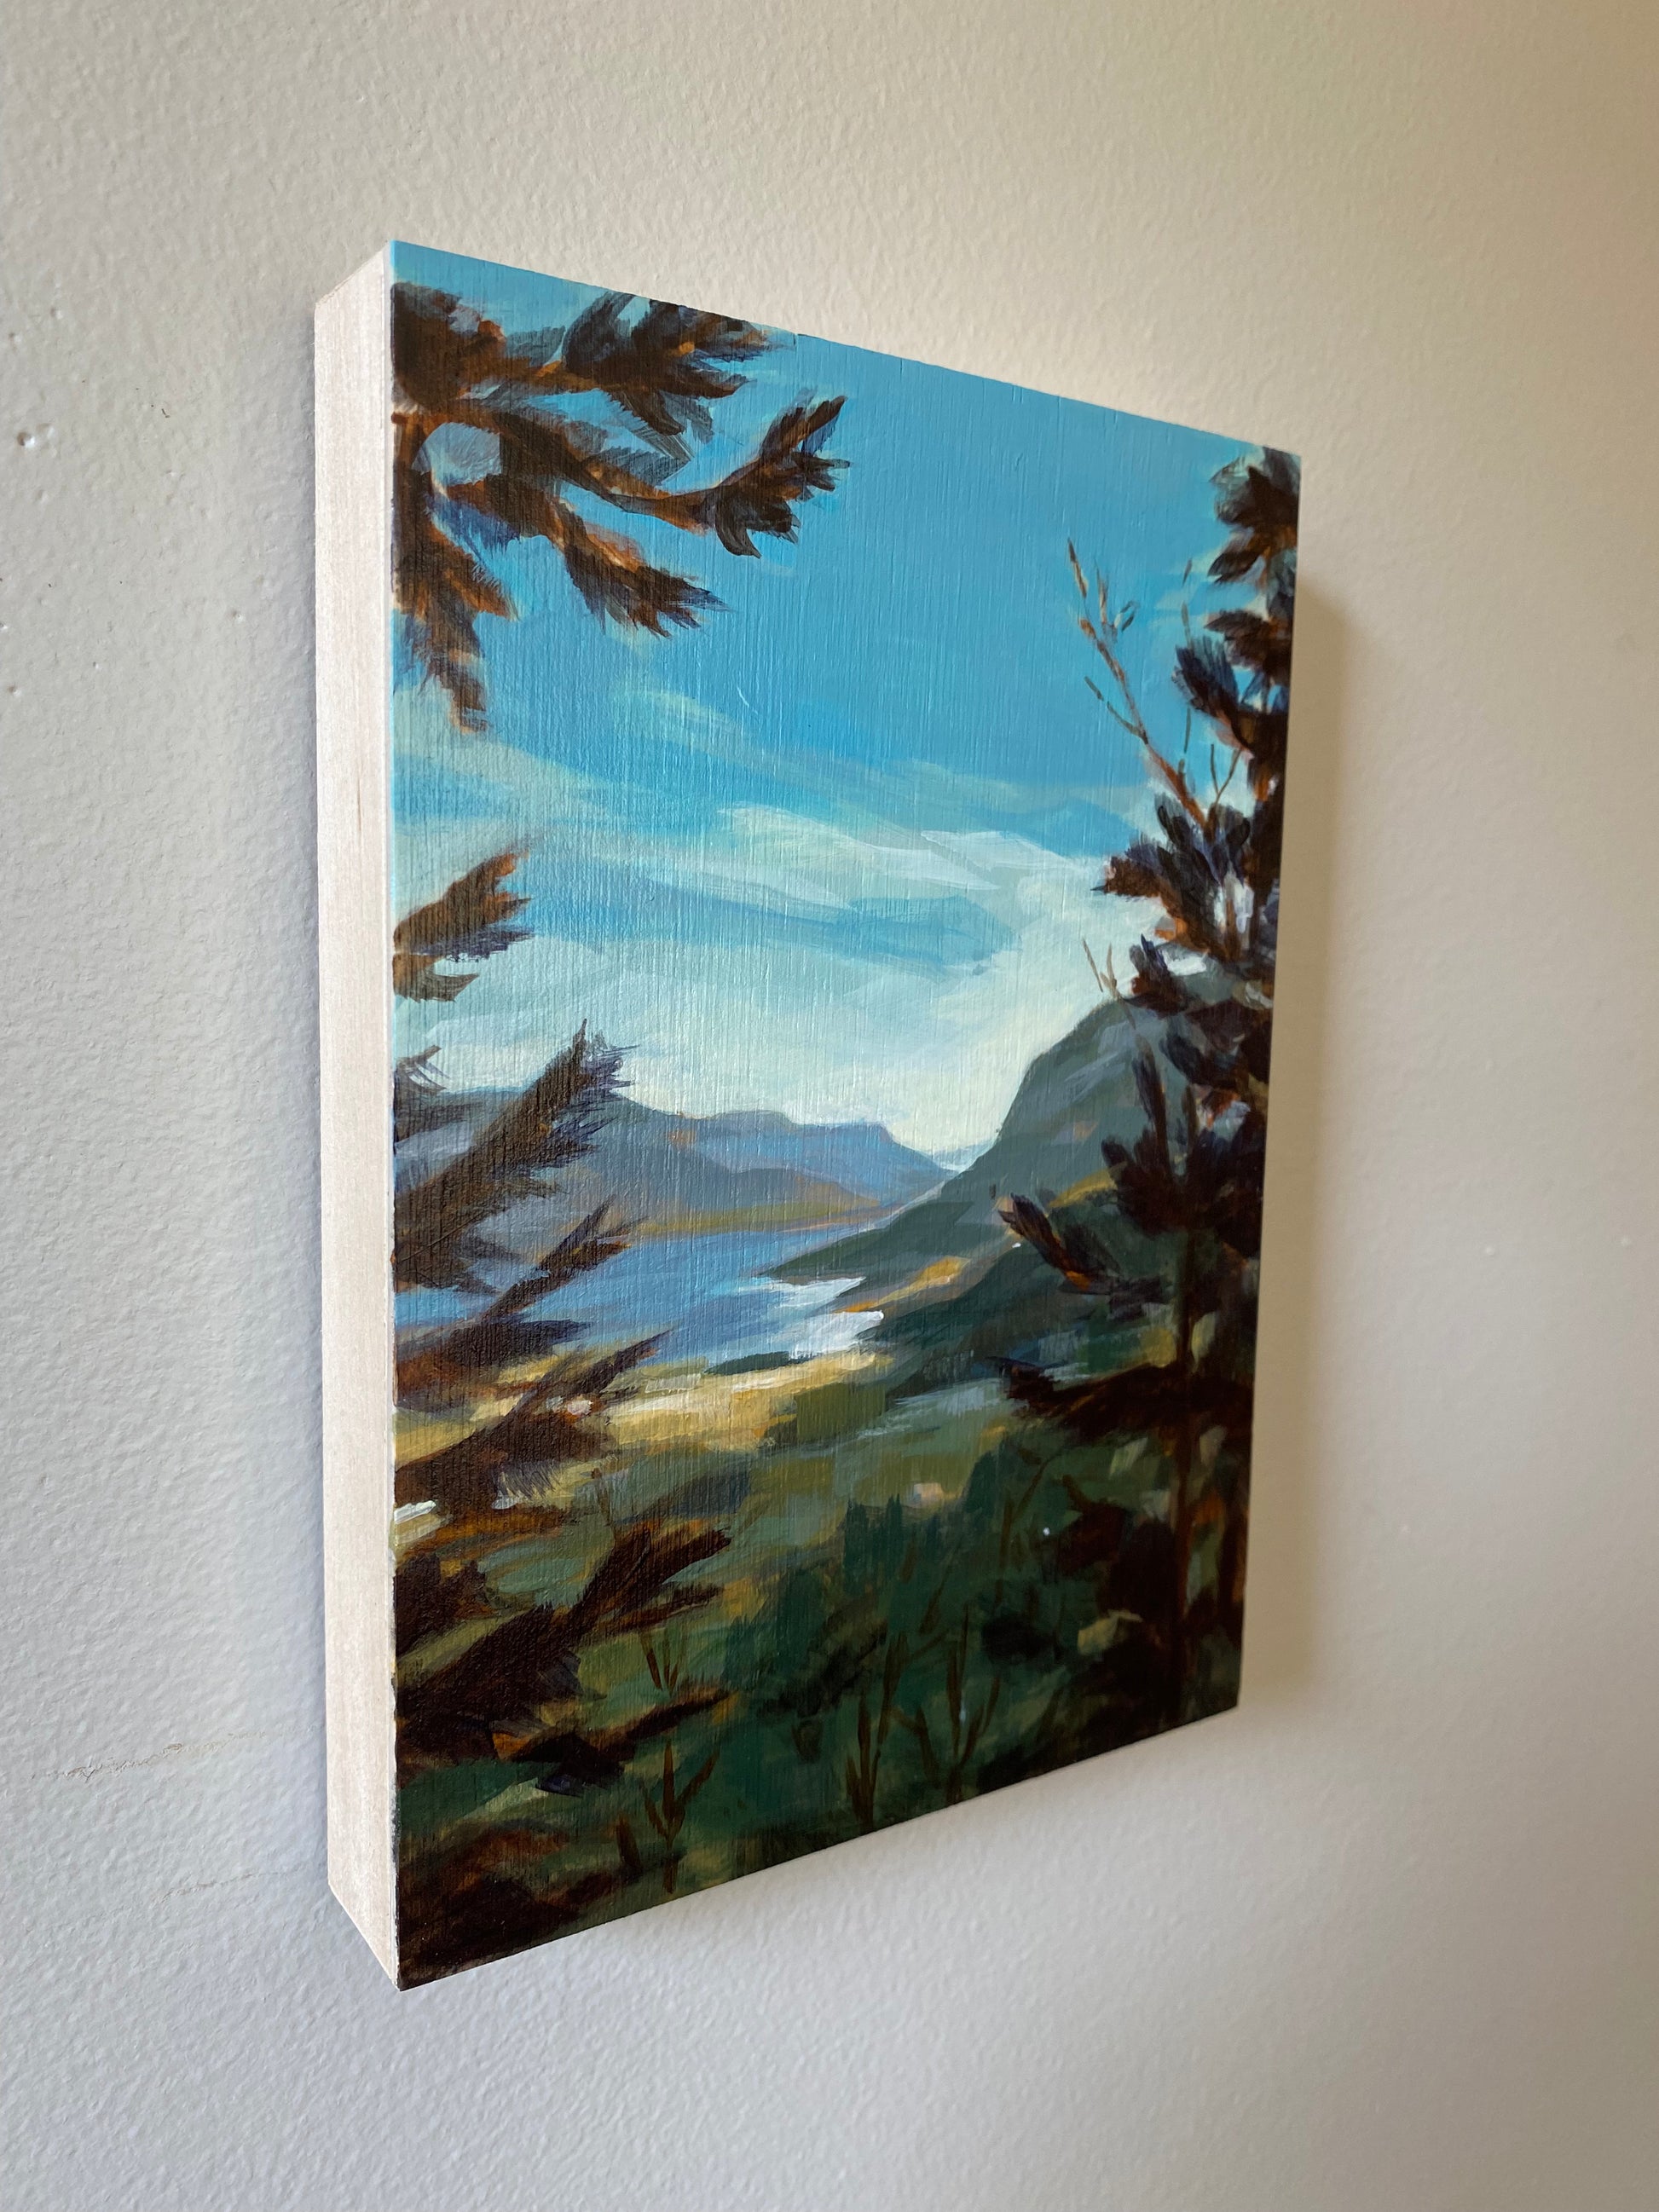 Columbia River Gorge Painting. 5x7 Portait Original Acrylic Painting of Columbia River Gorge View framed art.